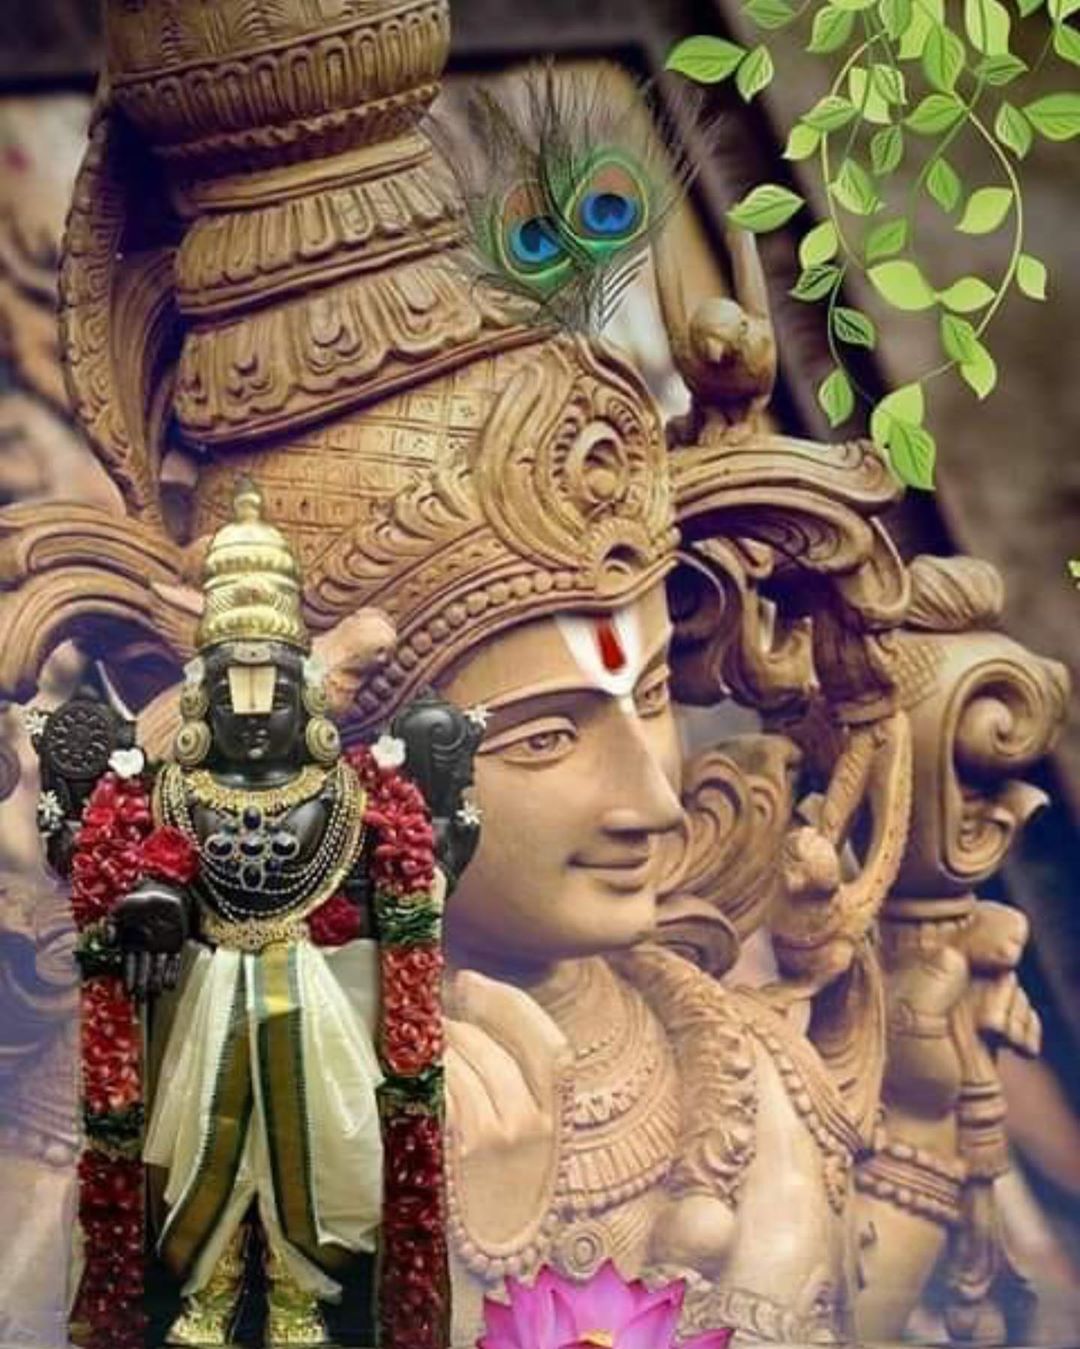 101 Lord Balaji Images | Tirupati God Balaji Images ...